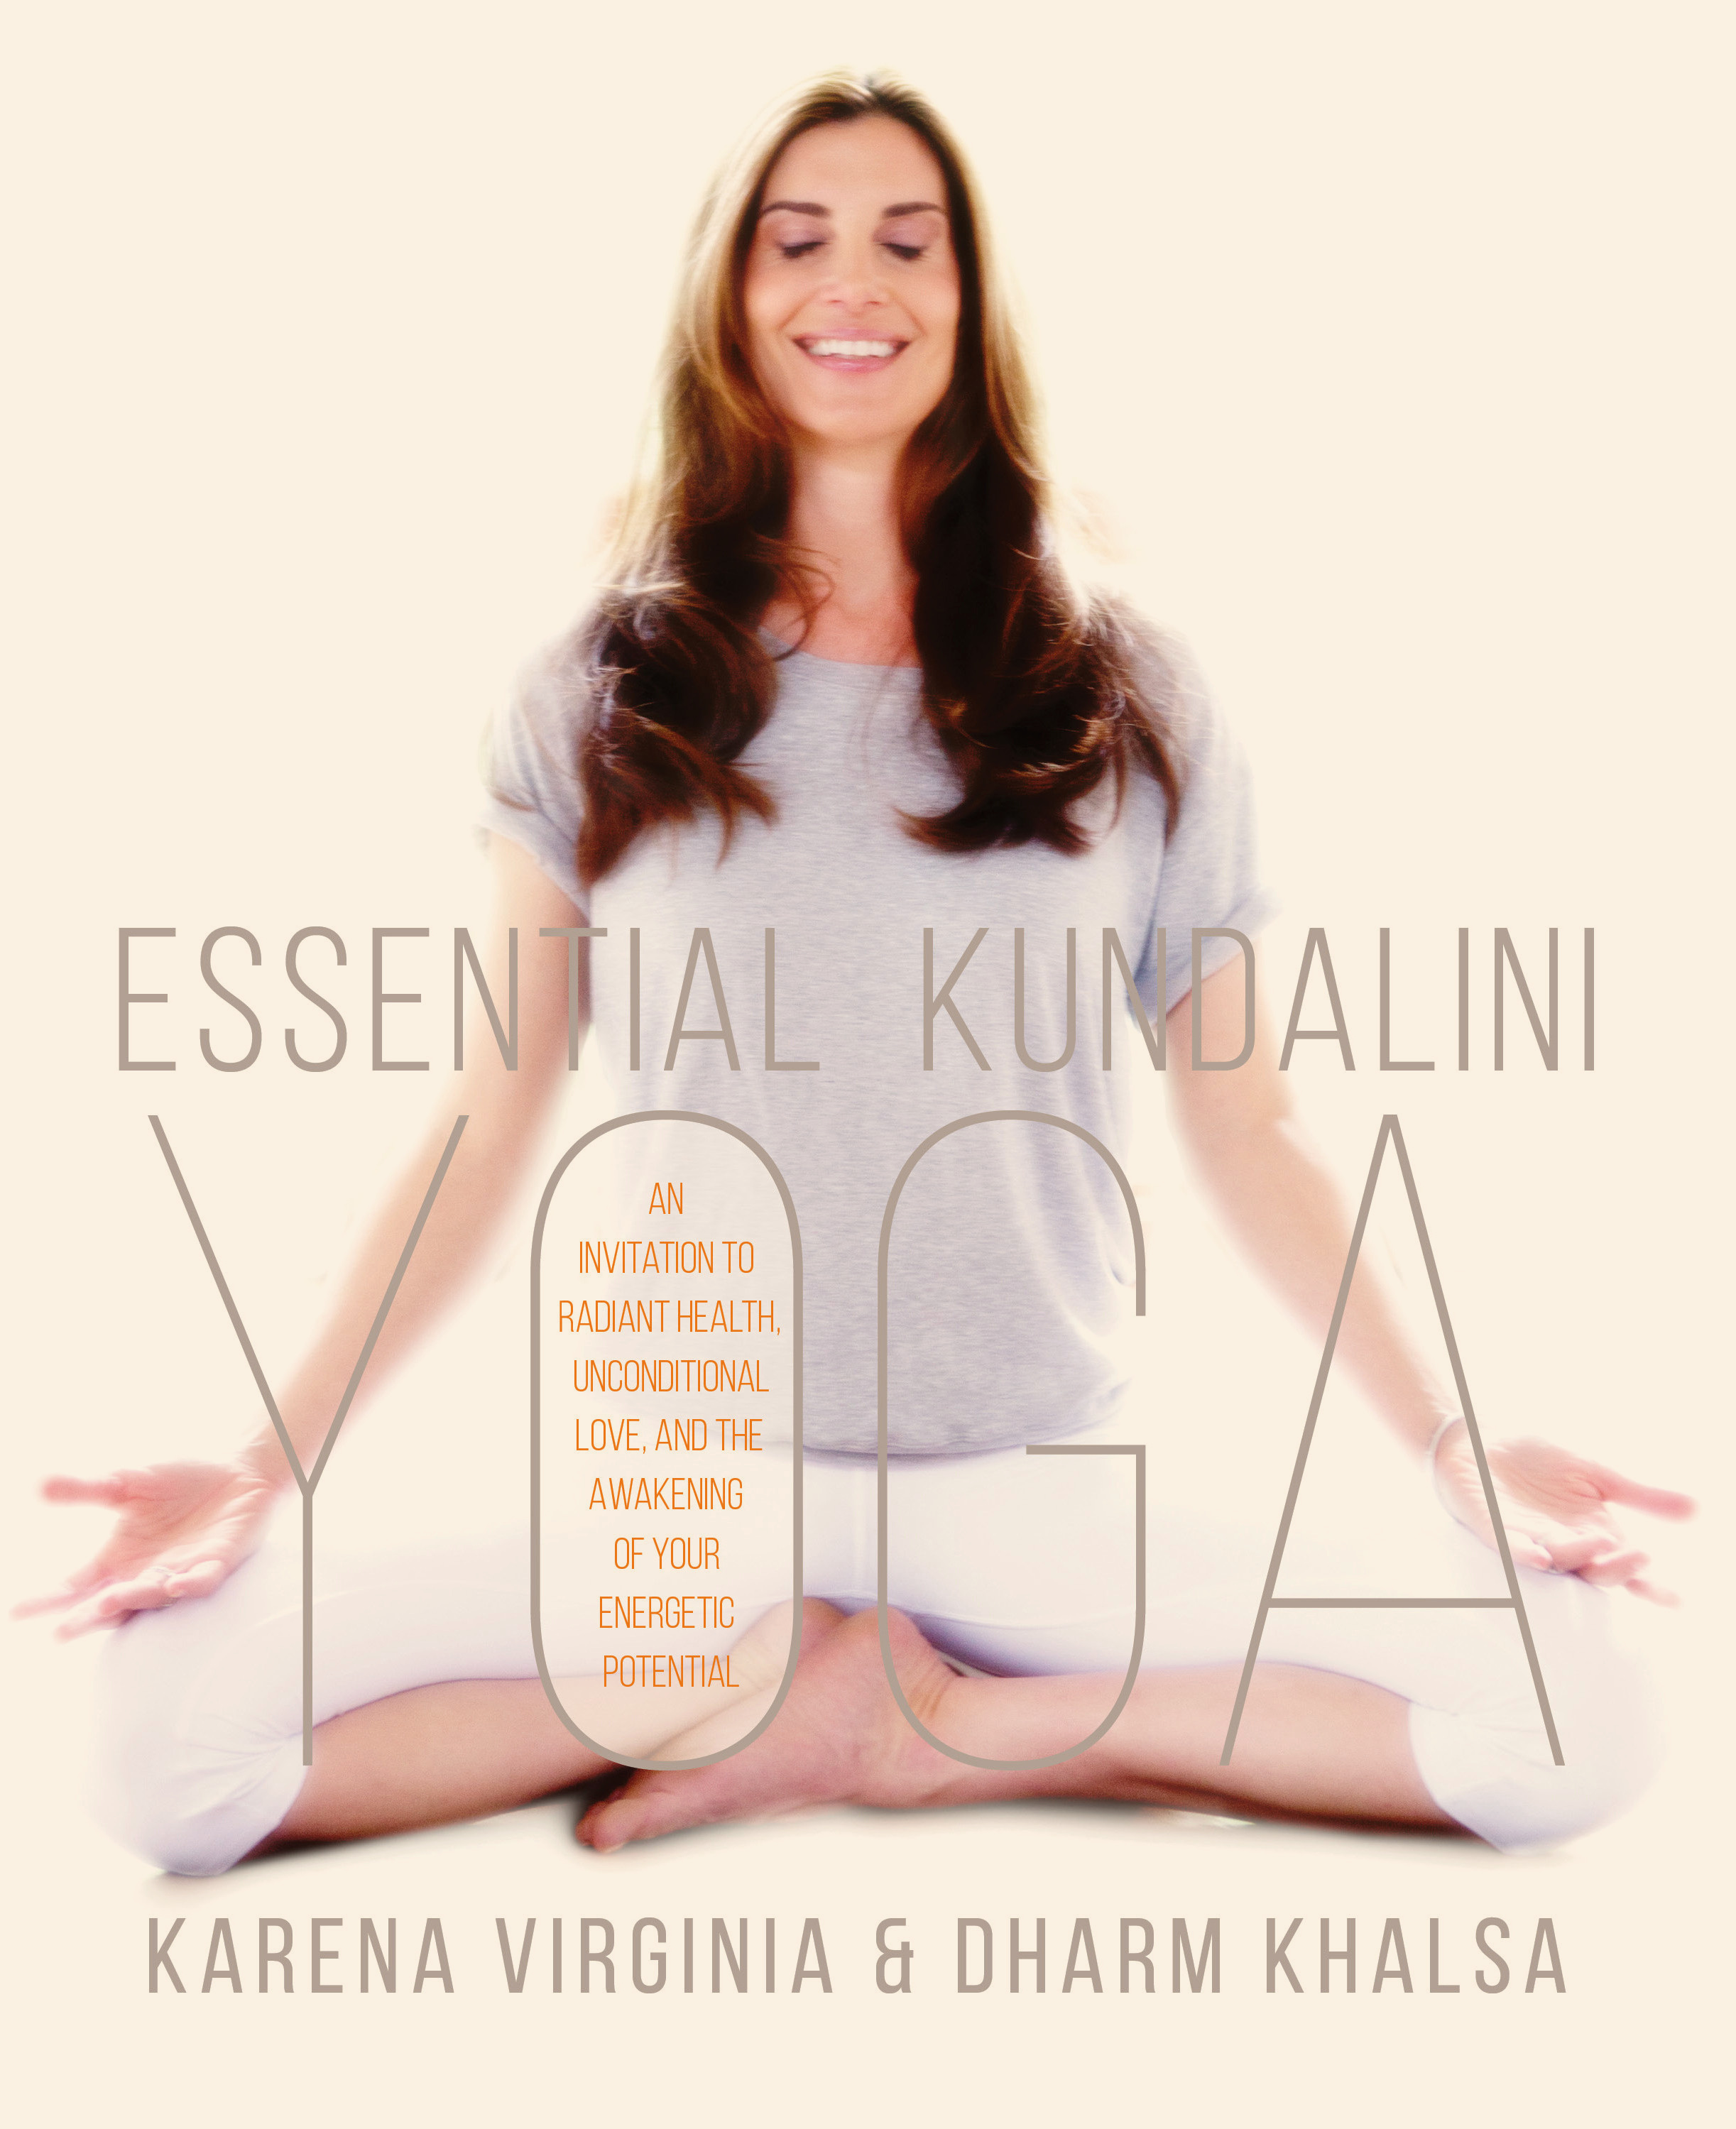 bk04748-essential-kundalini-yoga-published-cover_1.jpg